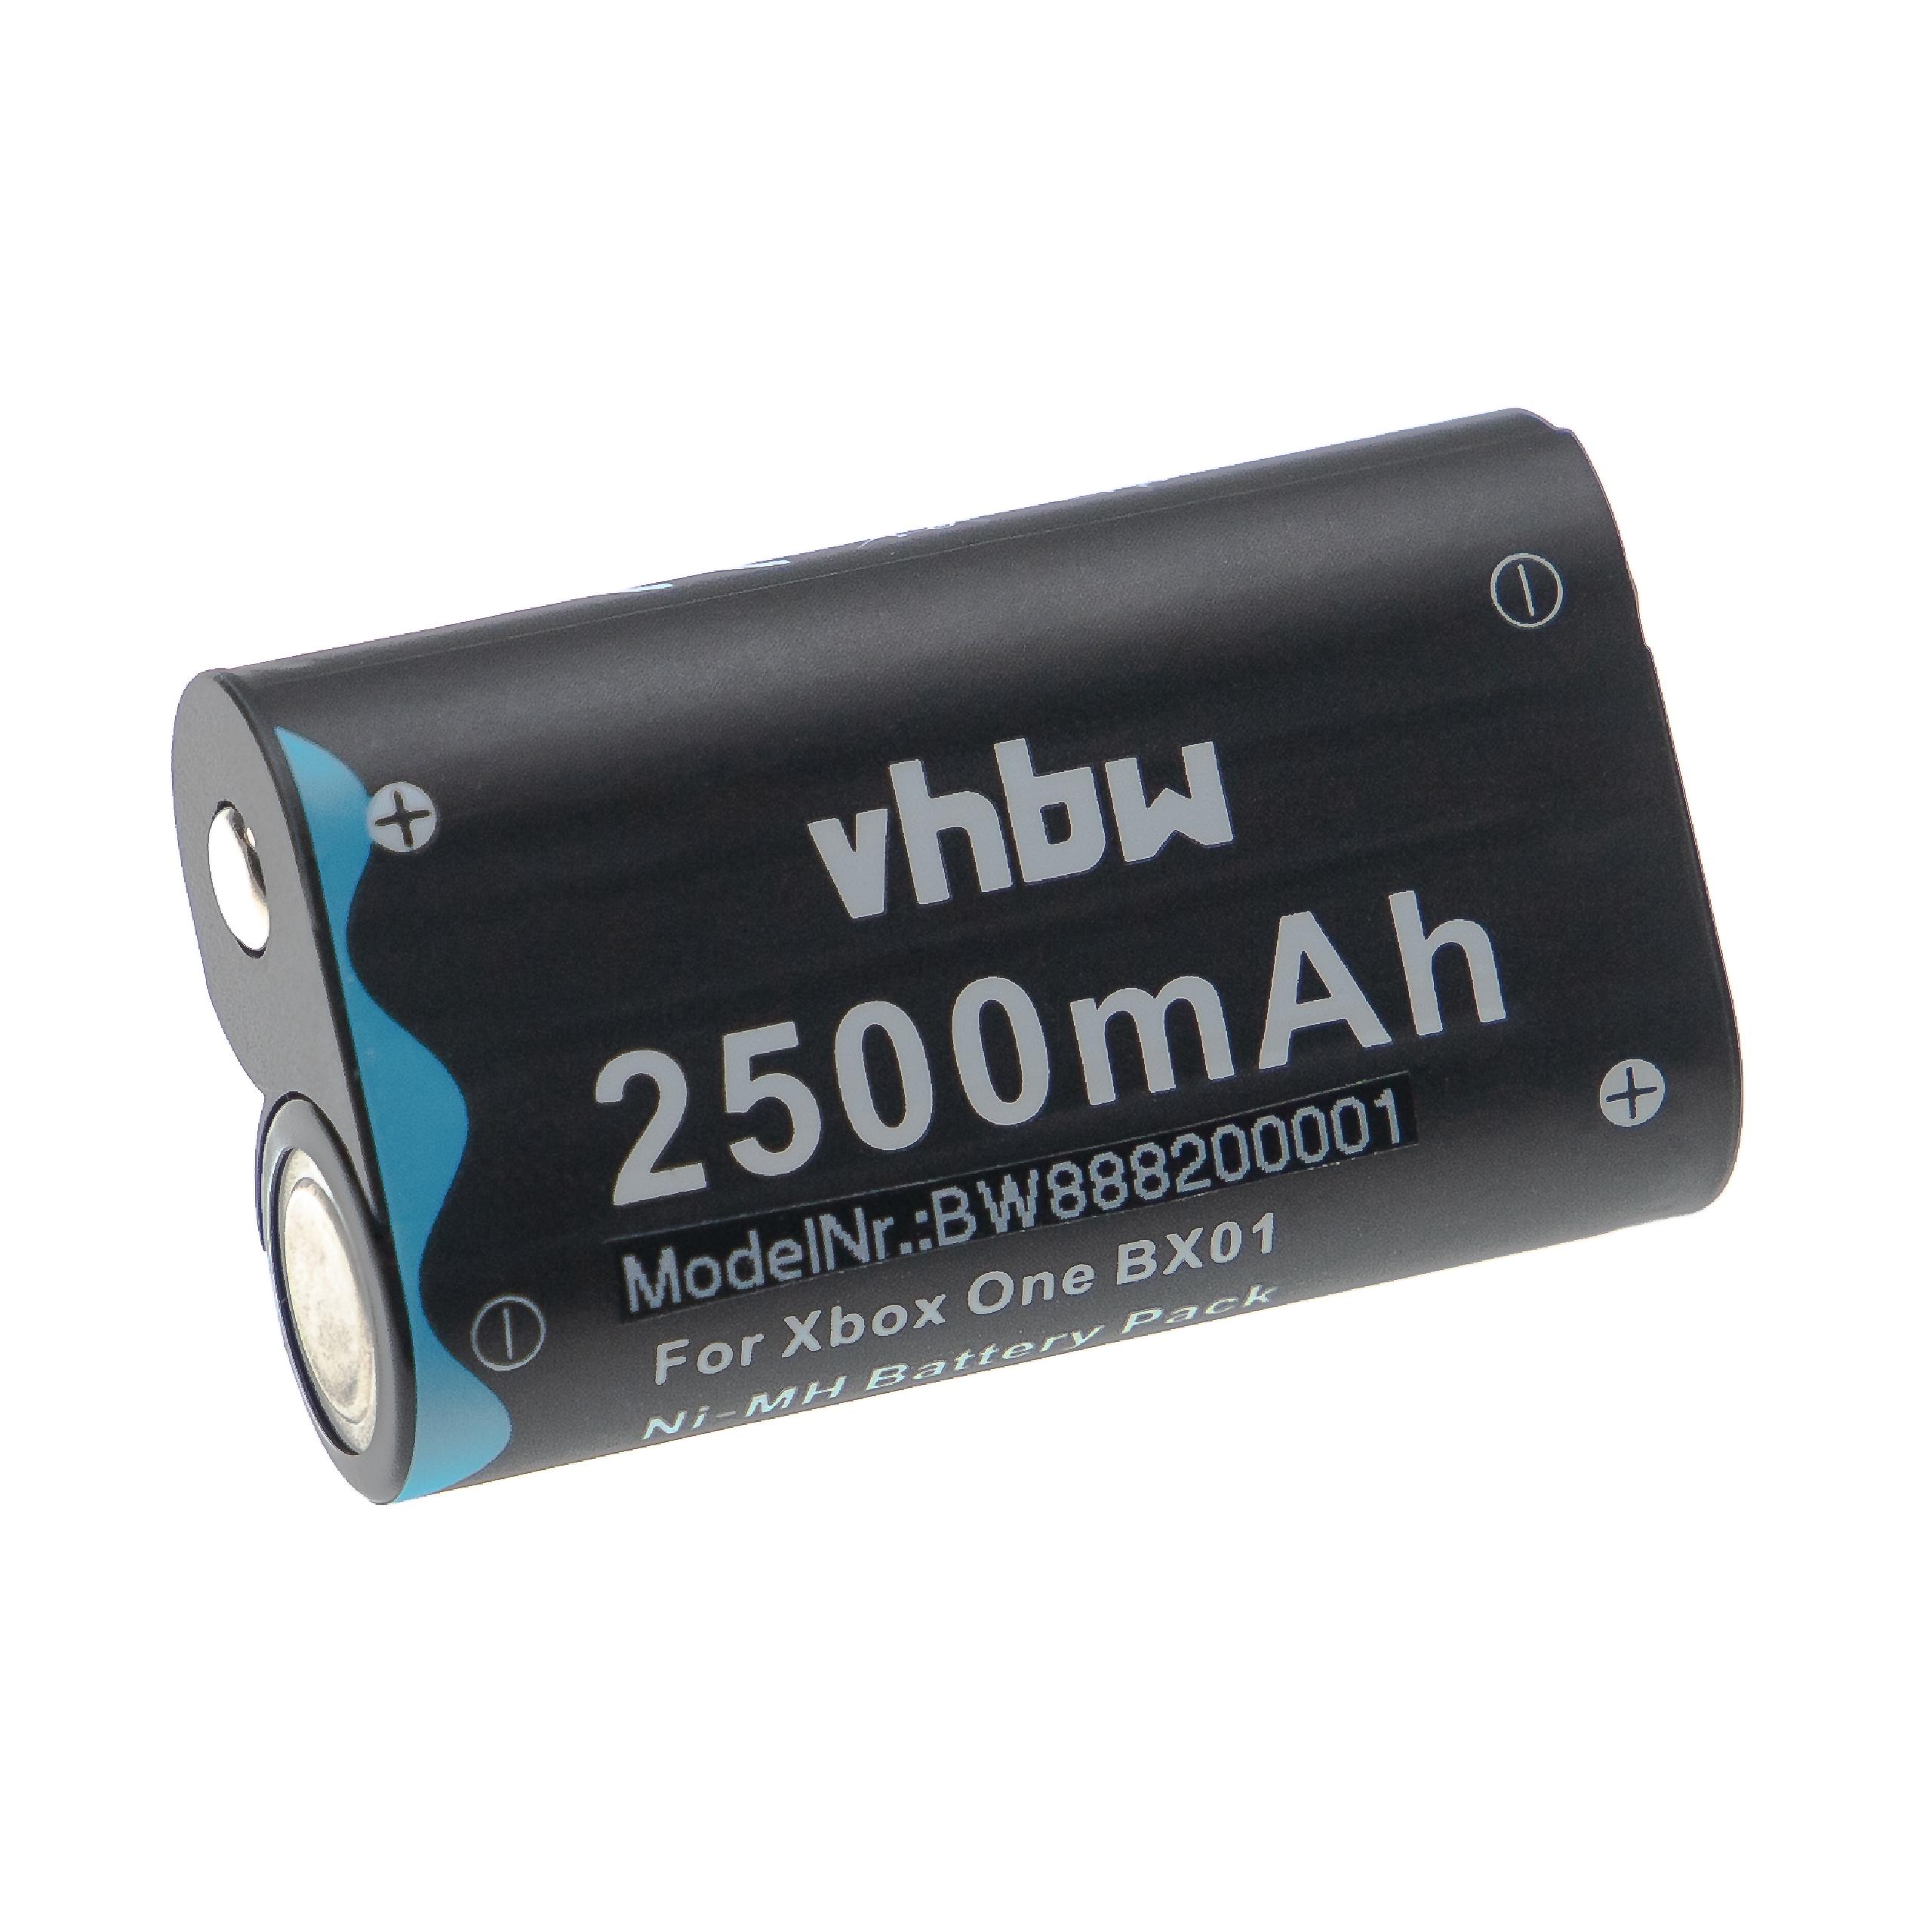 Akumulator do pada zamiennik Microsoft BX01, C100 - 2500 mAh 2,4 V NiMH